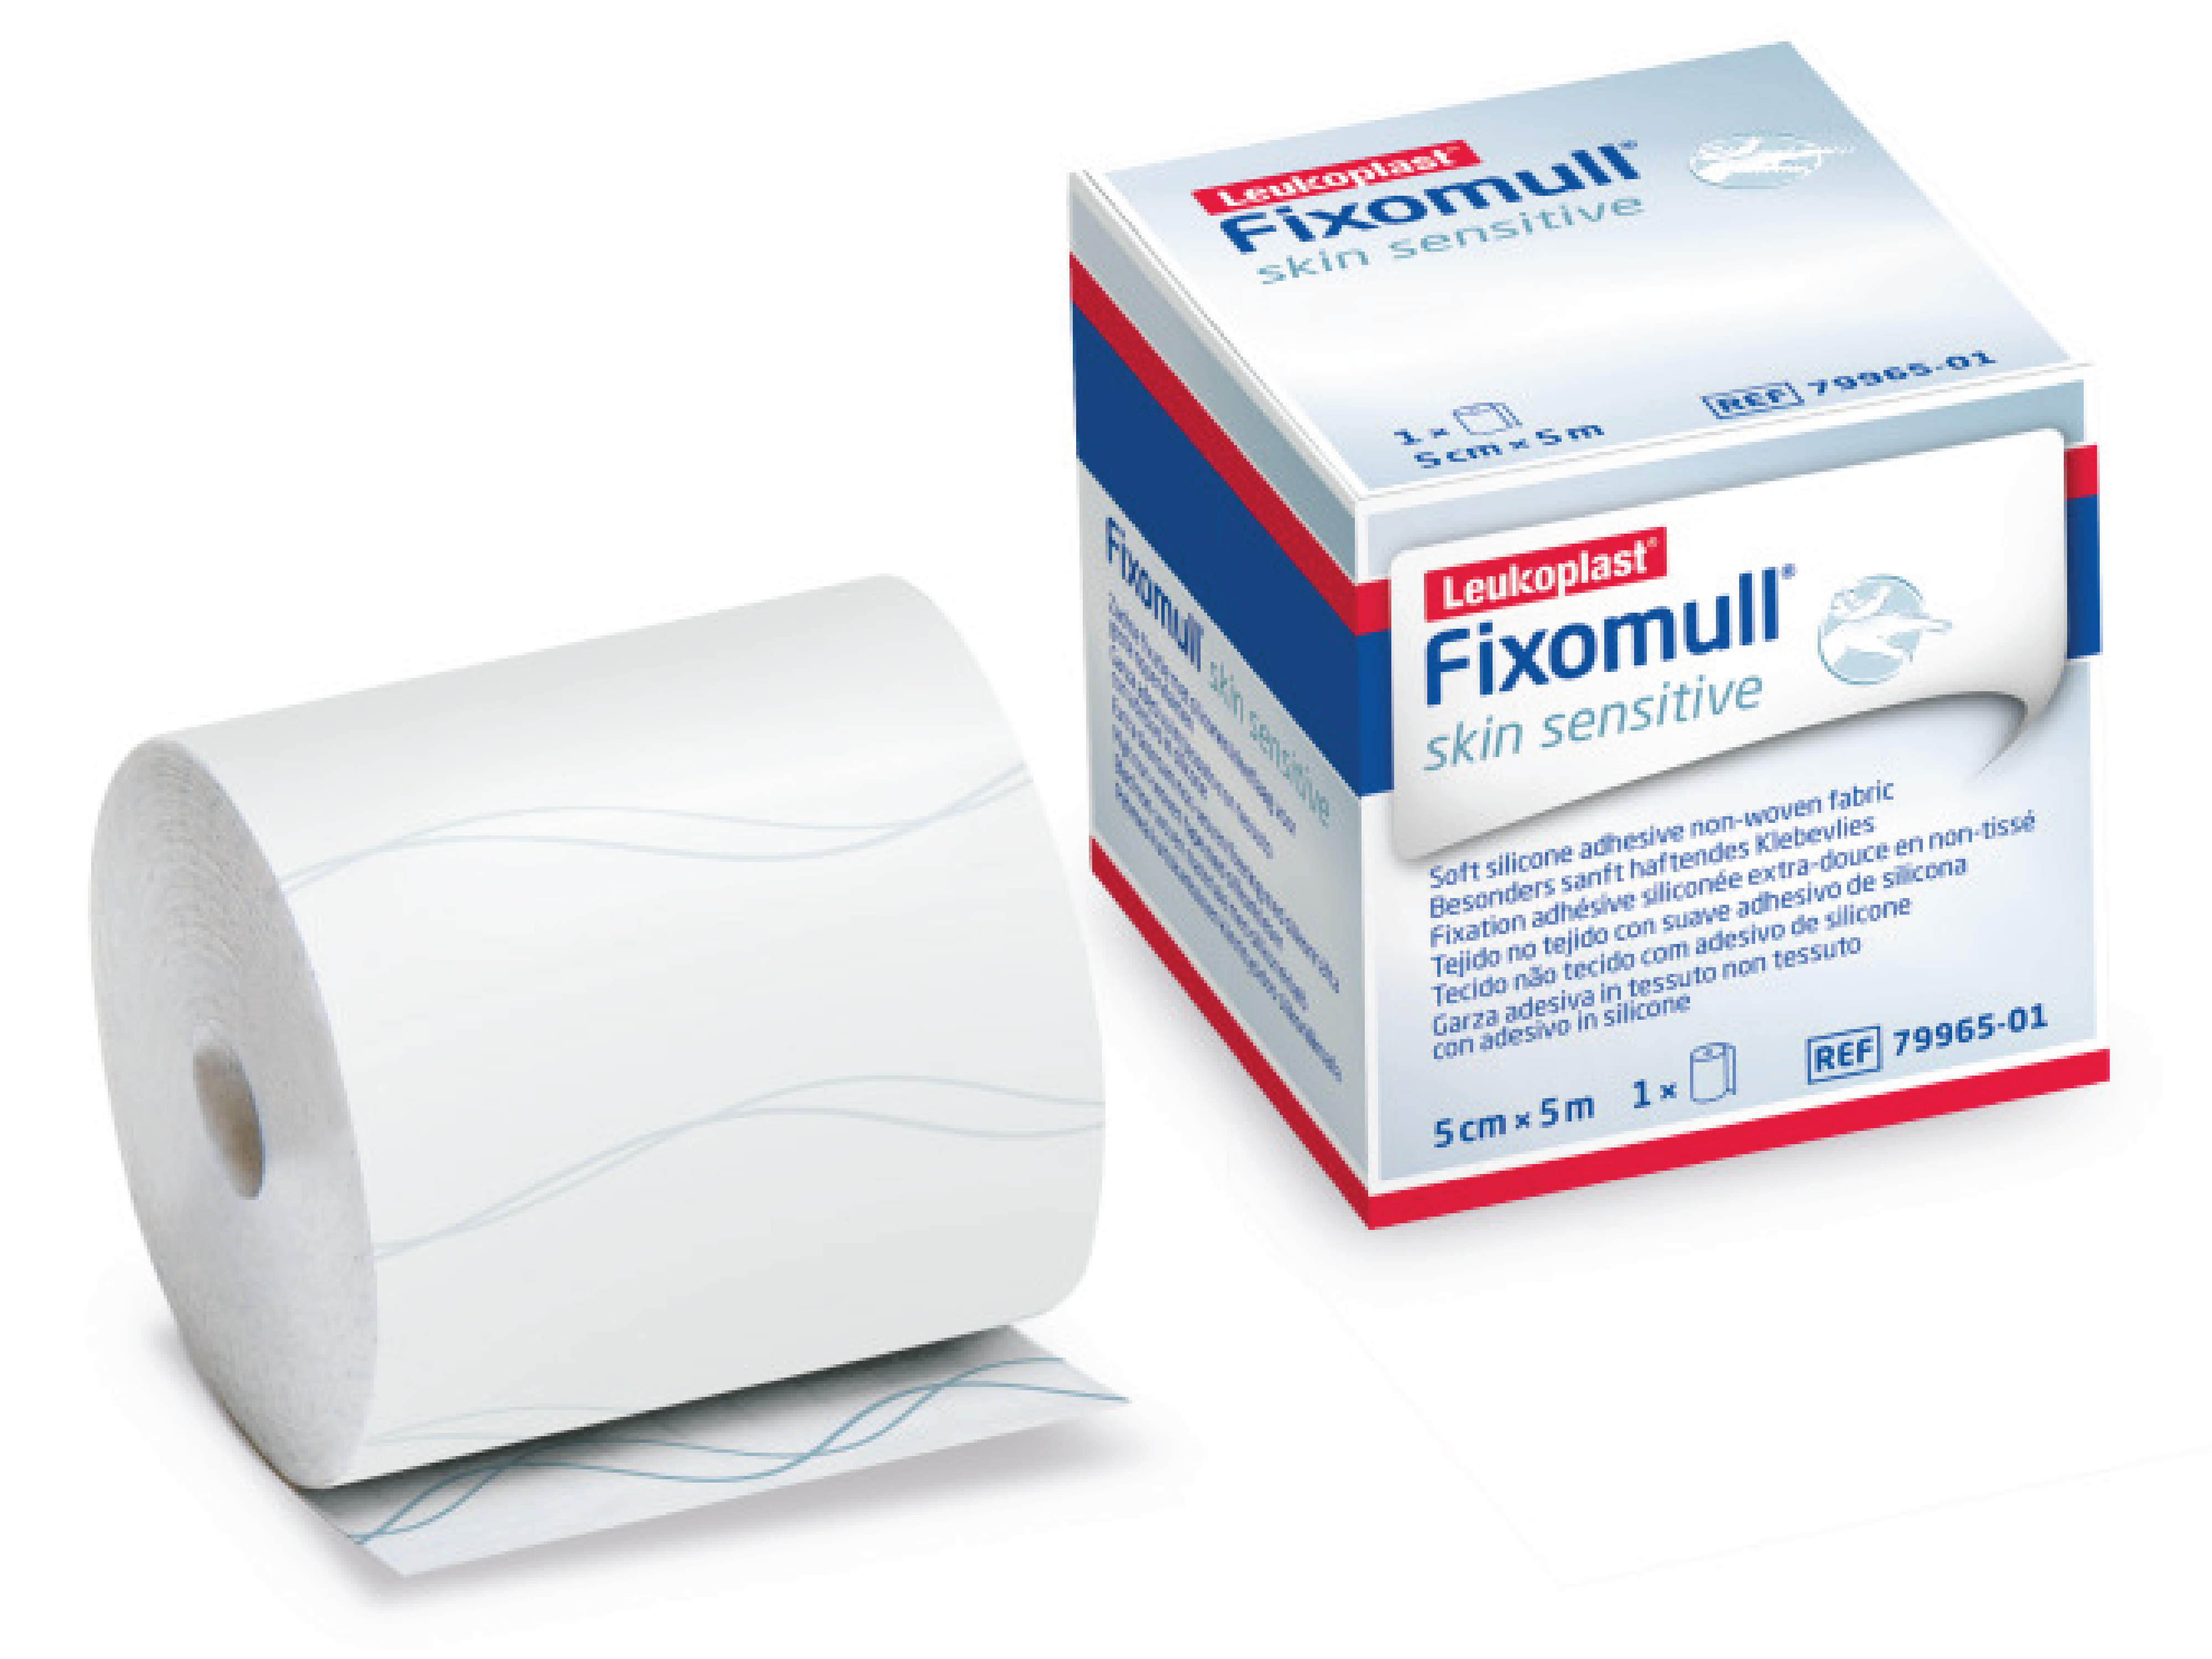 Leukoplast Fixomull Skin Sensitive Fikseringstape, 5cmx5m